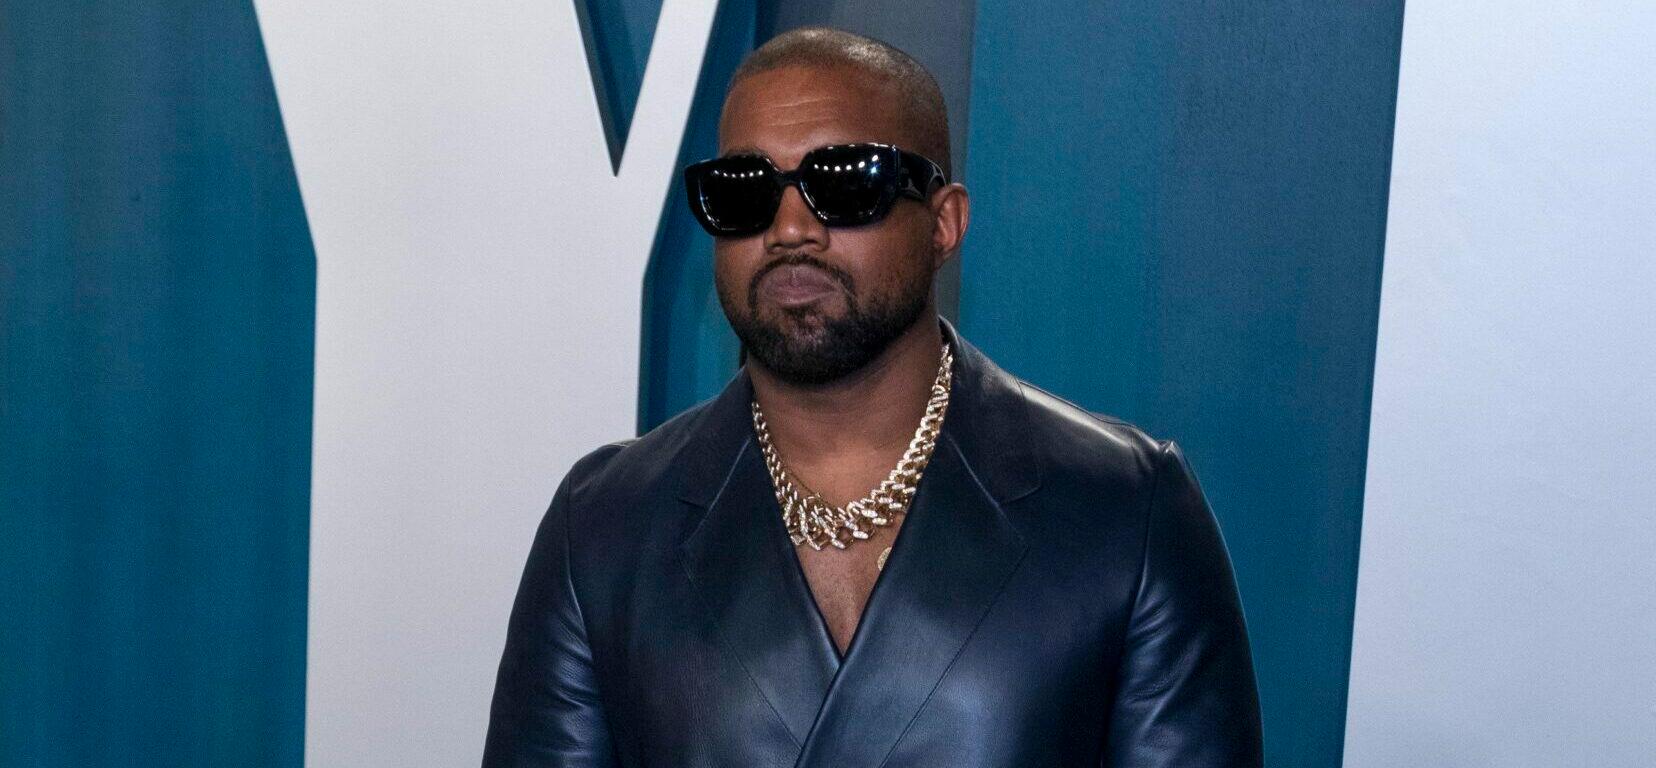 Kanye West Files Lawsuit Over Leaked Music On Instagram